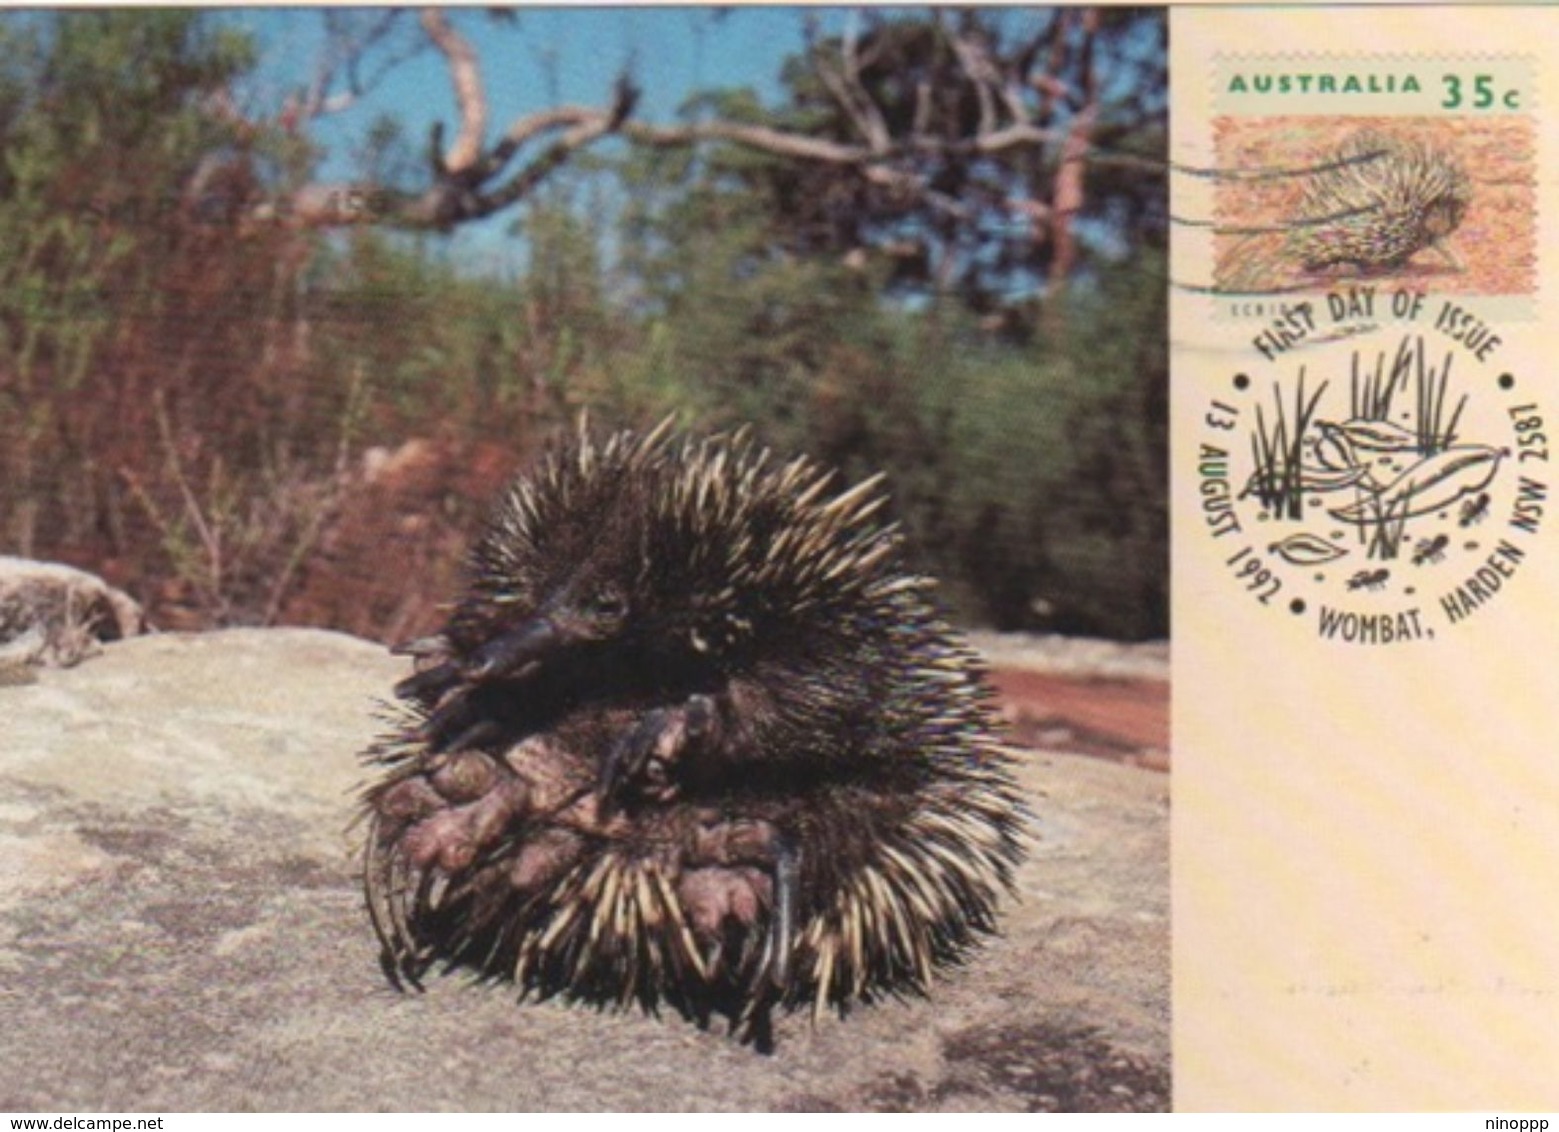 Australia 2017 Postally Used Maximum Card,sent To Italy,1992 Australian Wildlife,Echidna - Maximum Cards